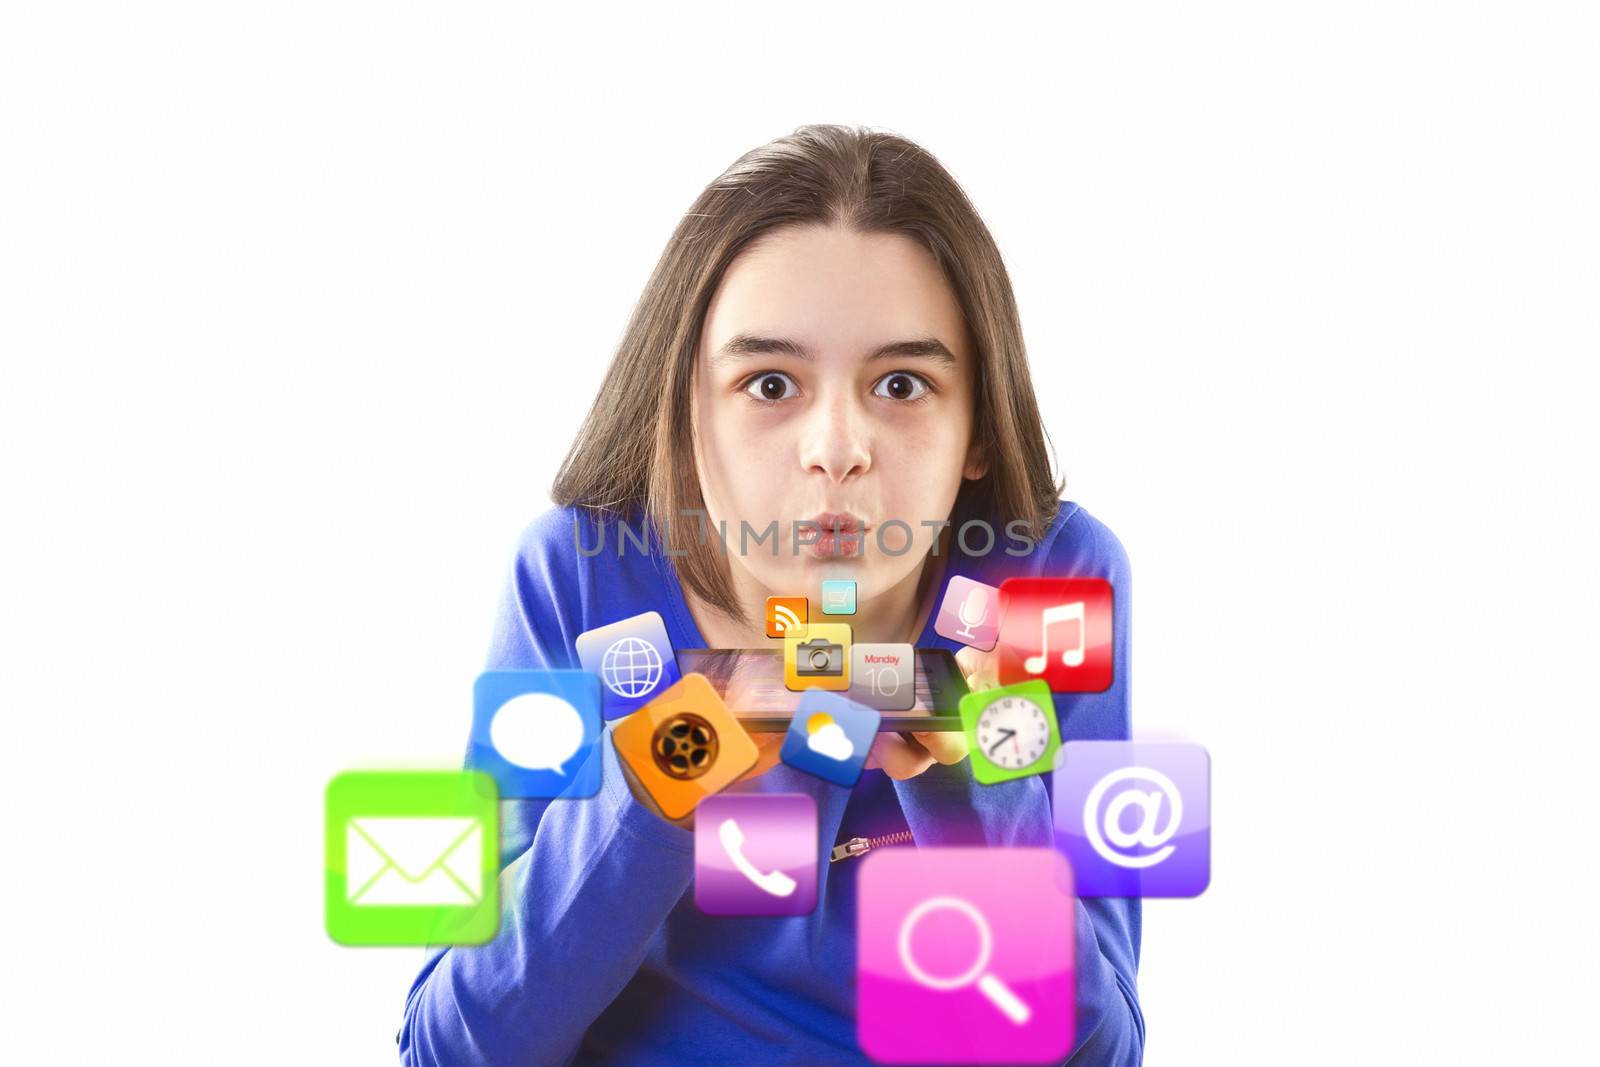 Teenage girl blowing app icons from digital tablet
